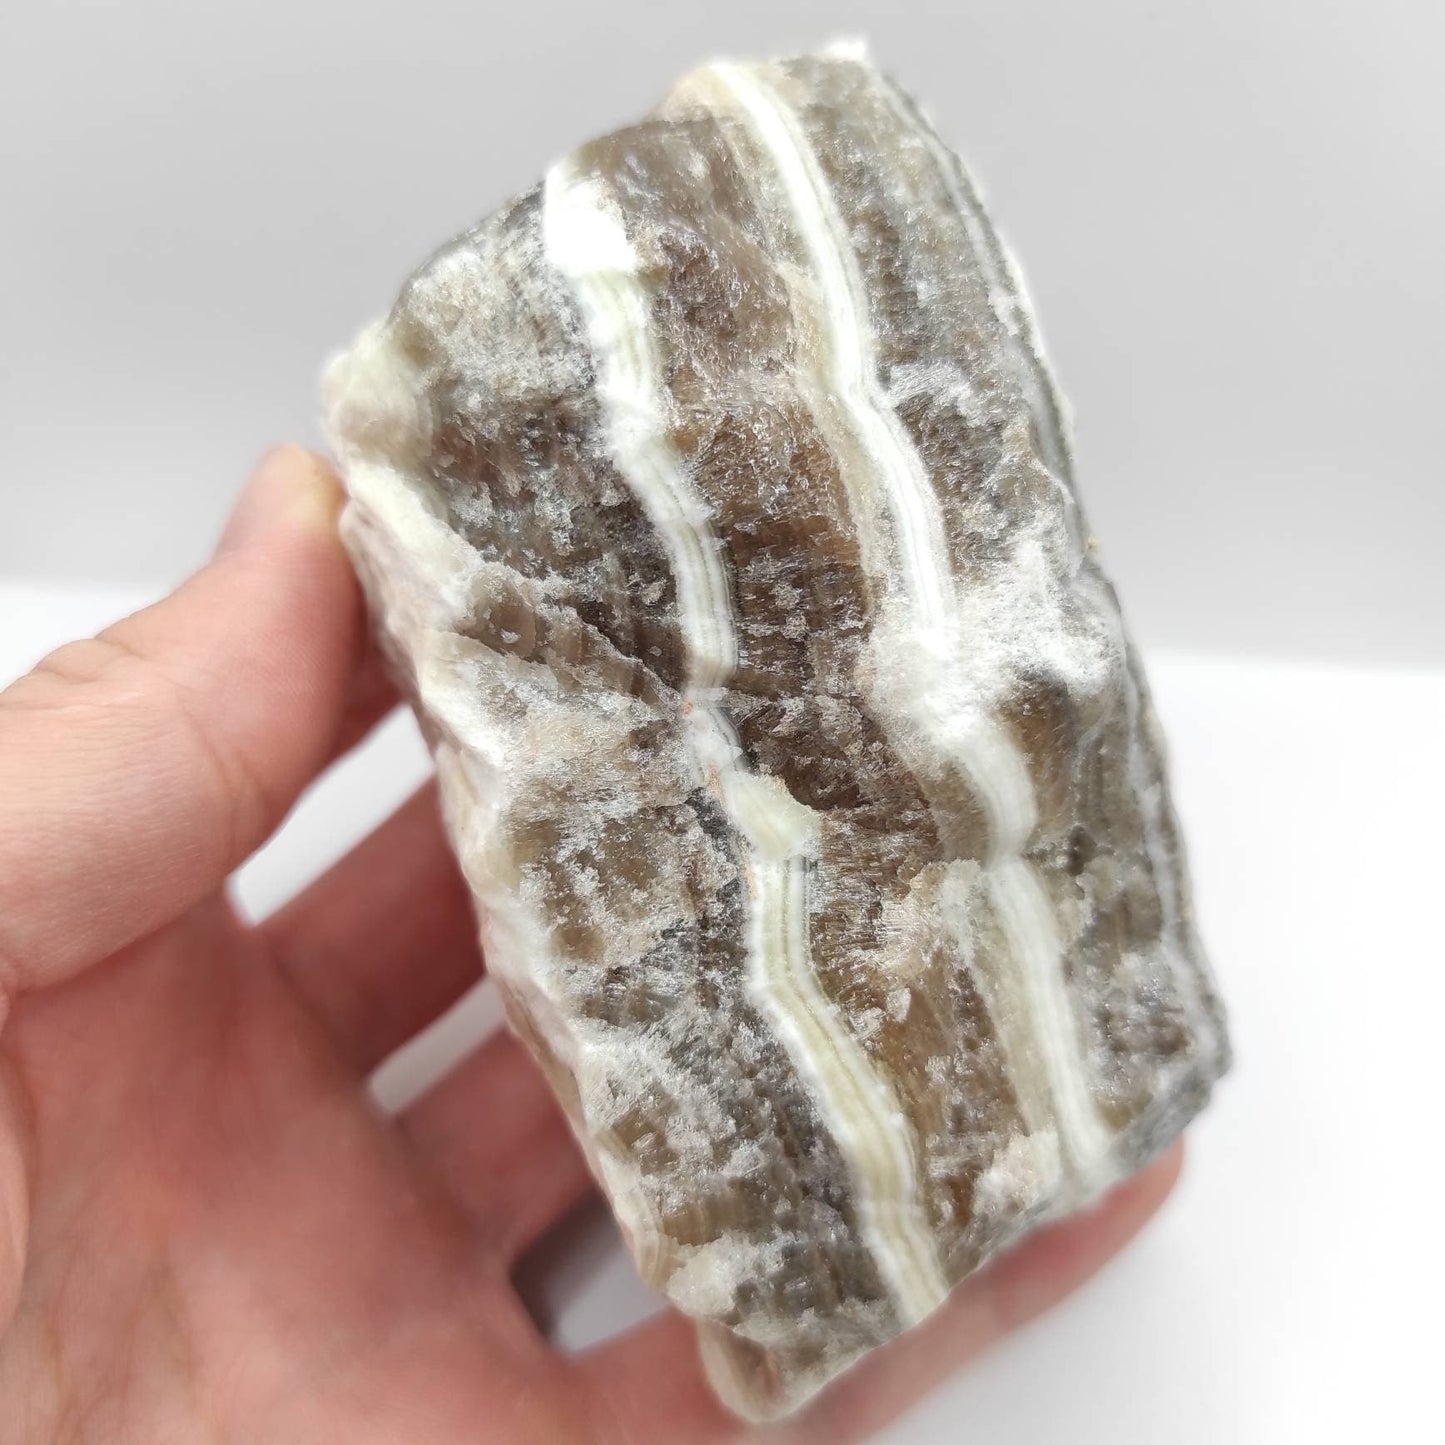 541g Zebra Calcite Stone Rough Zebra Calcite Crystal Specimen Raw Minerals Yellow and Brown Calcite Chihuahua Mexico Calcite Rock Natural